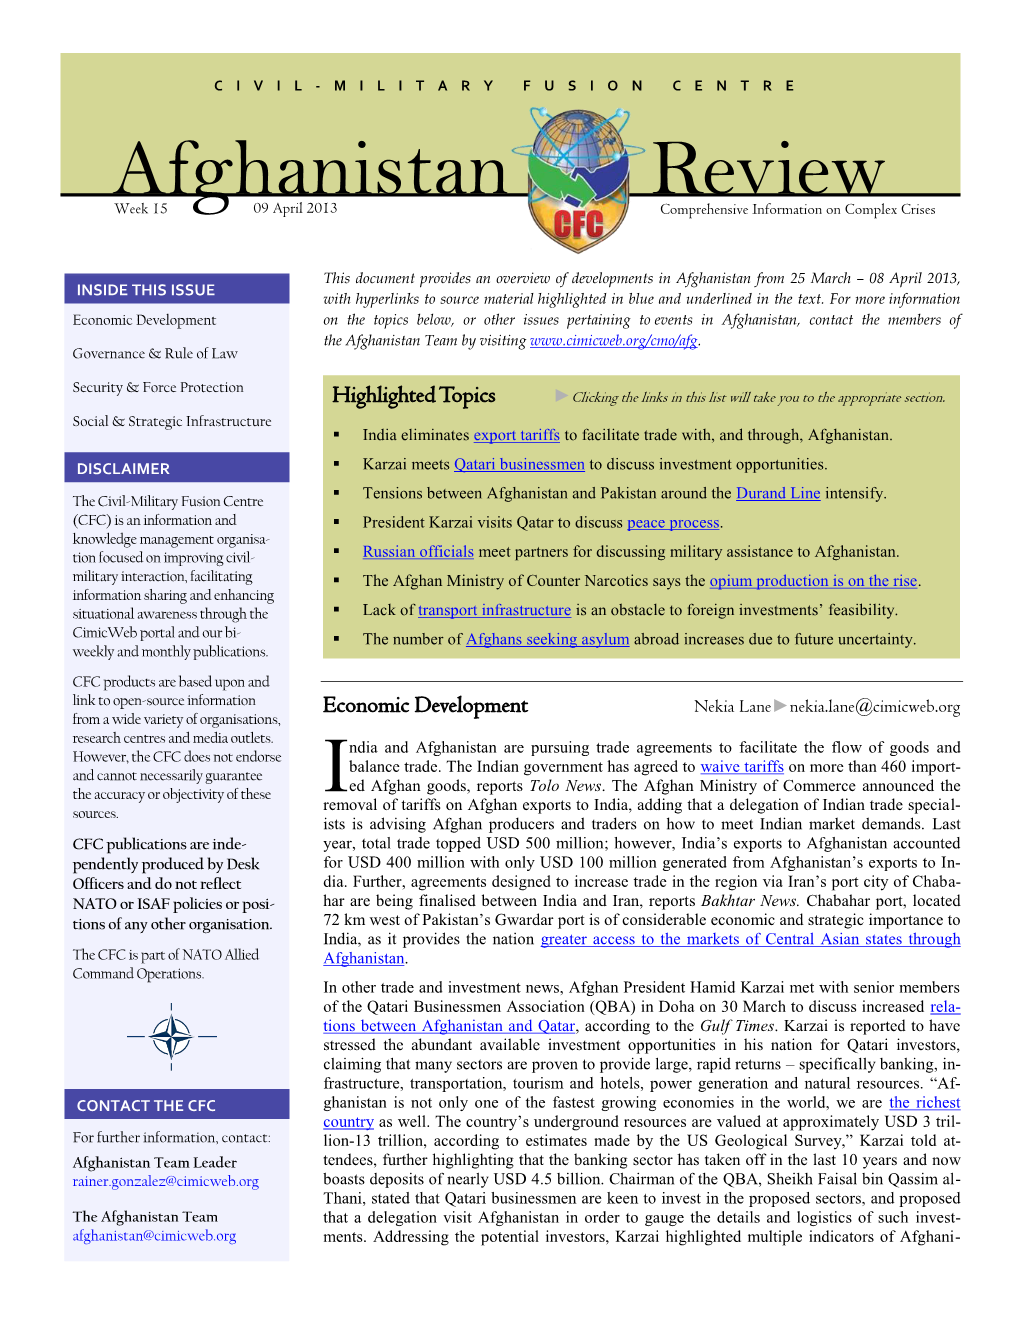 Afghanistan Review, 18 September 2012